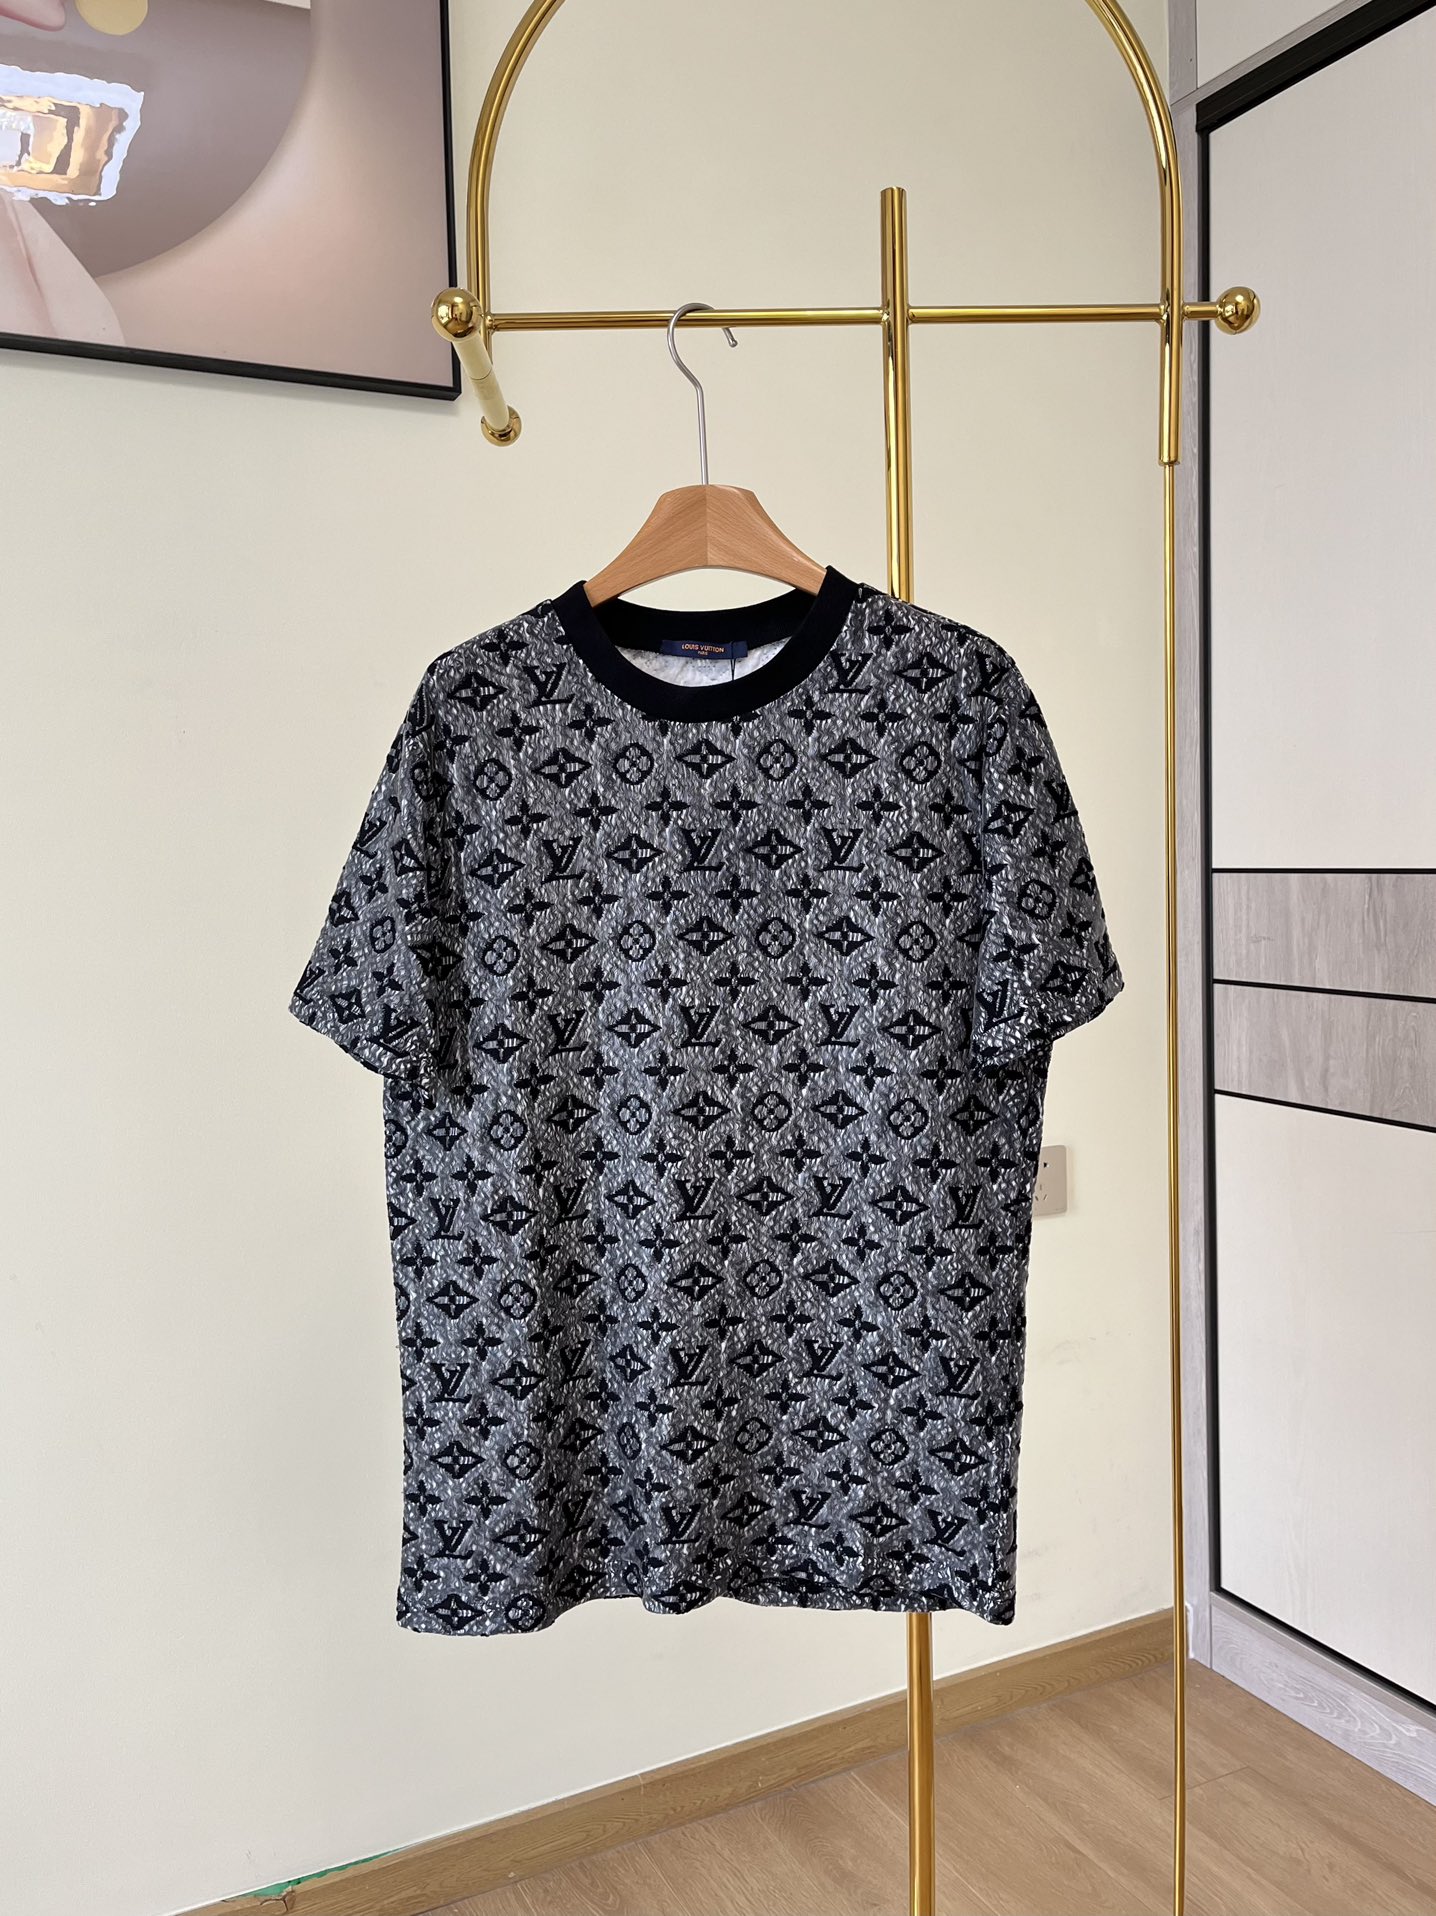 Louis Vuitton Clothing T-Shirt Cotton Fashion